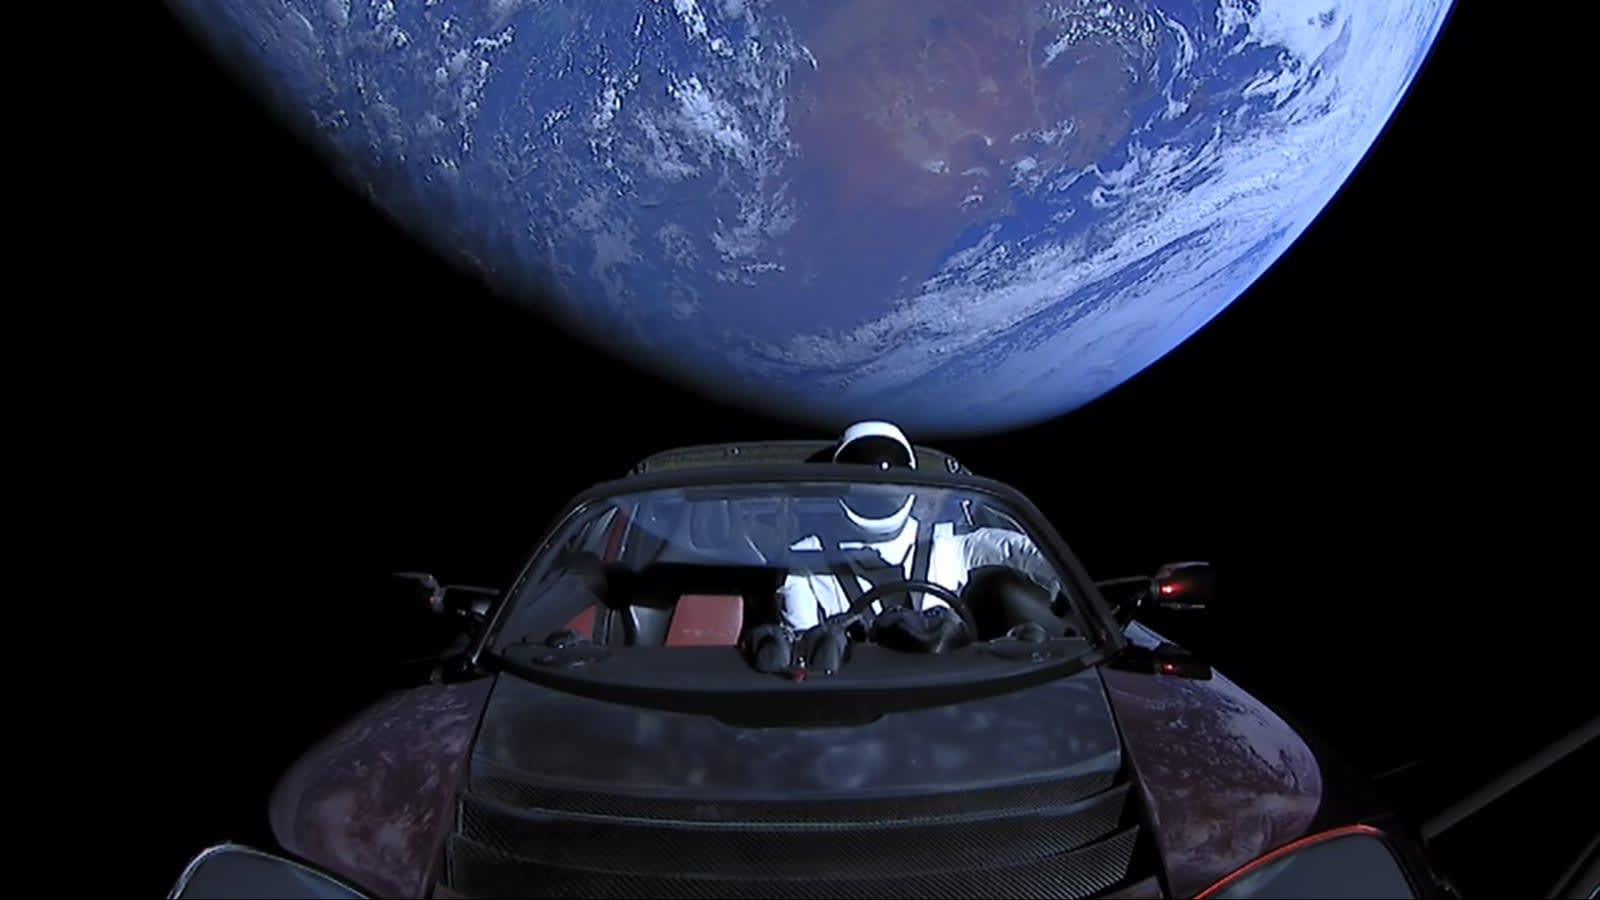 SpaceX's Starman Roadster has ventured past Mars